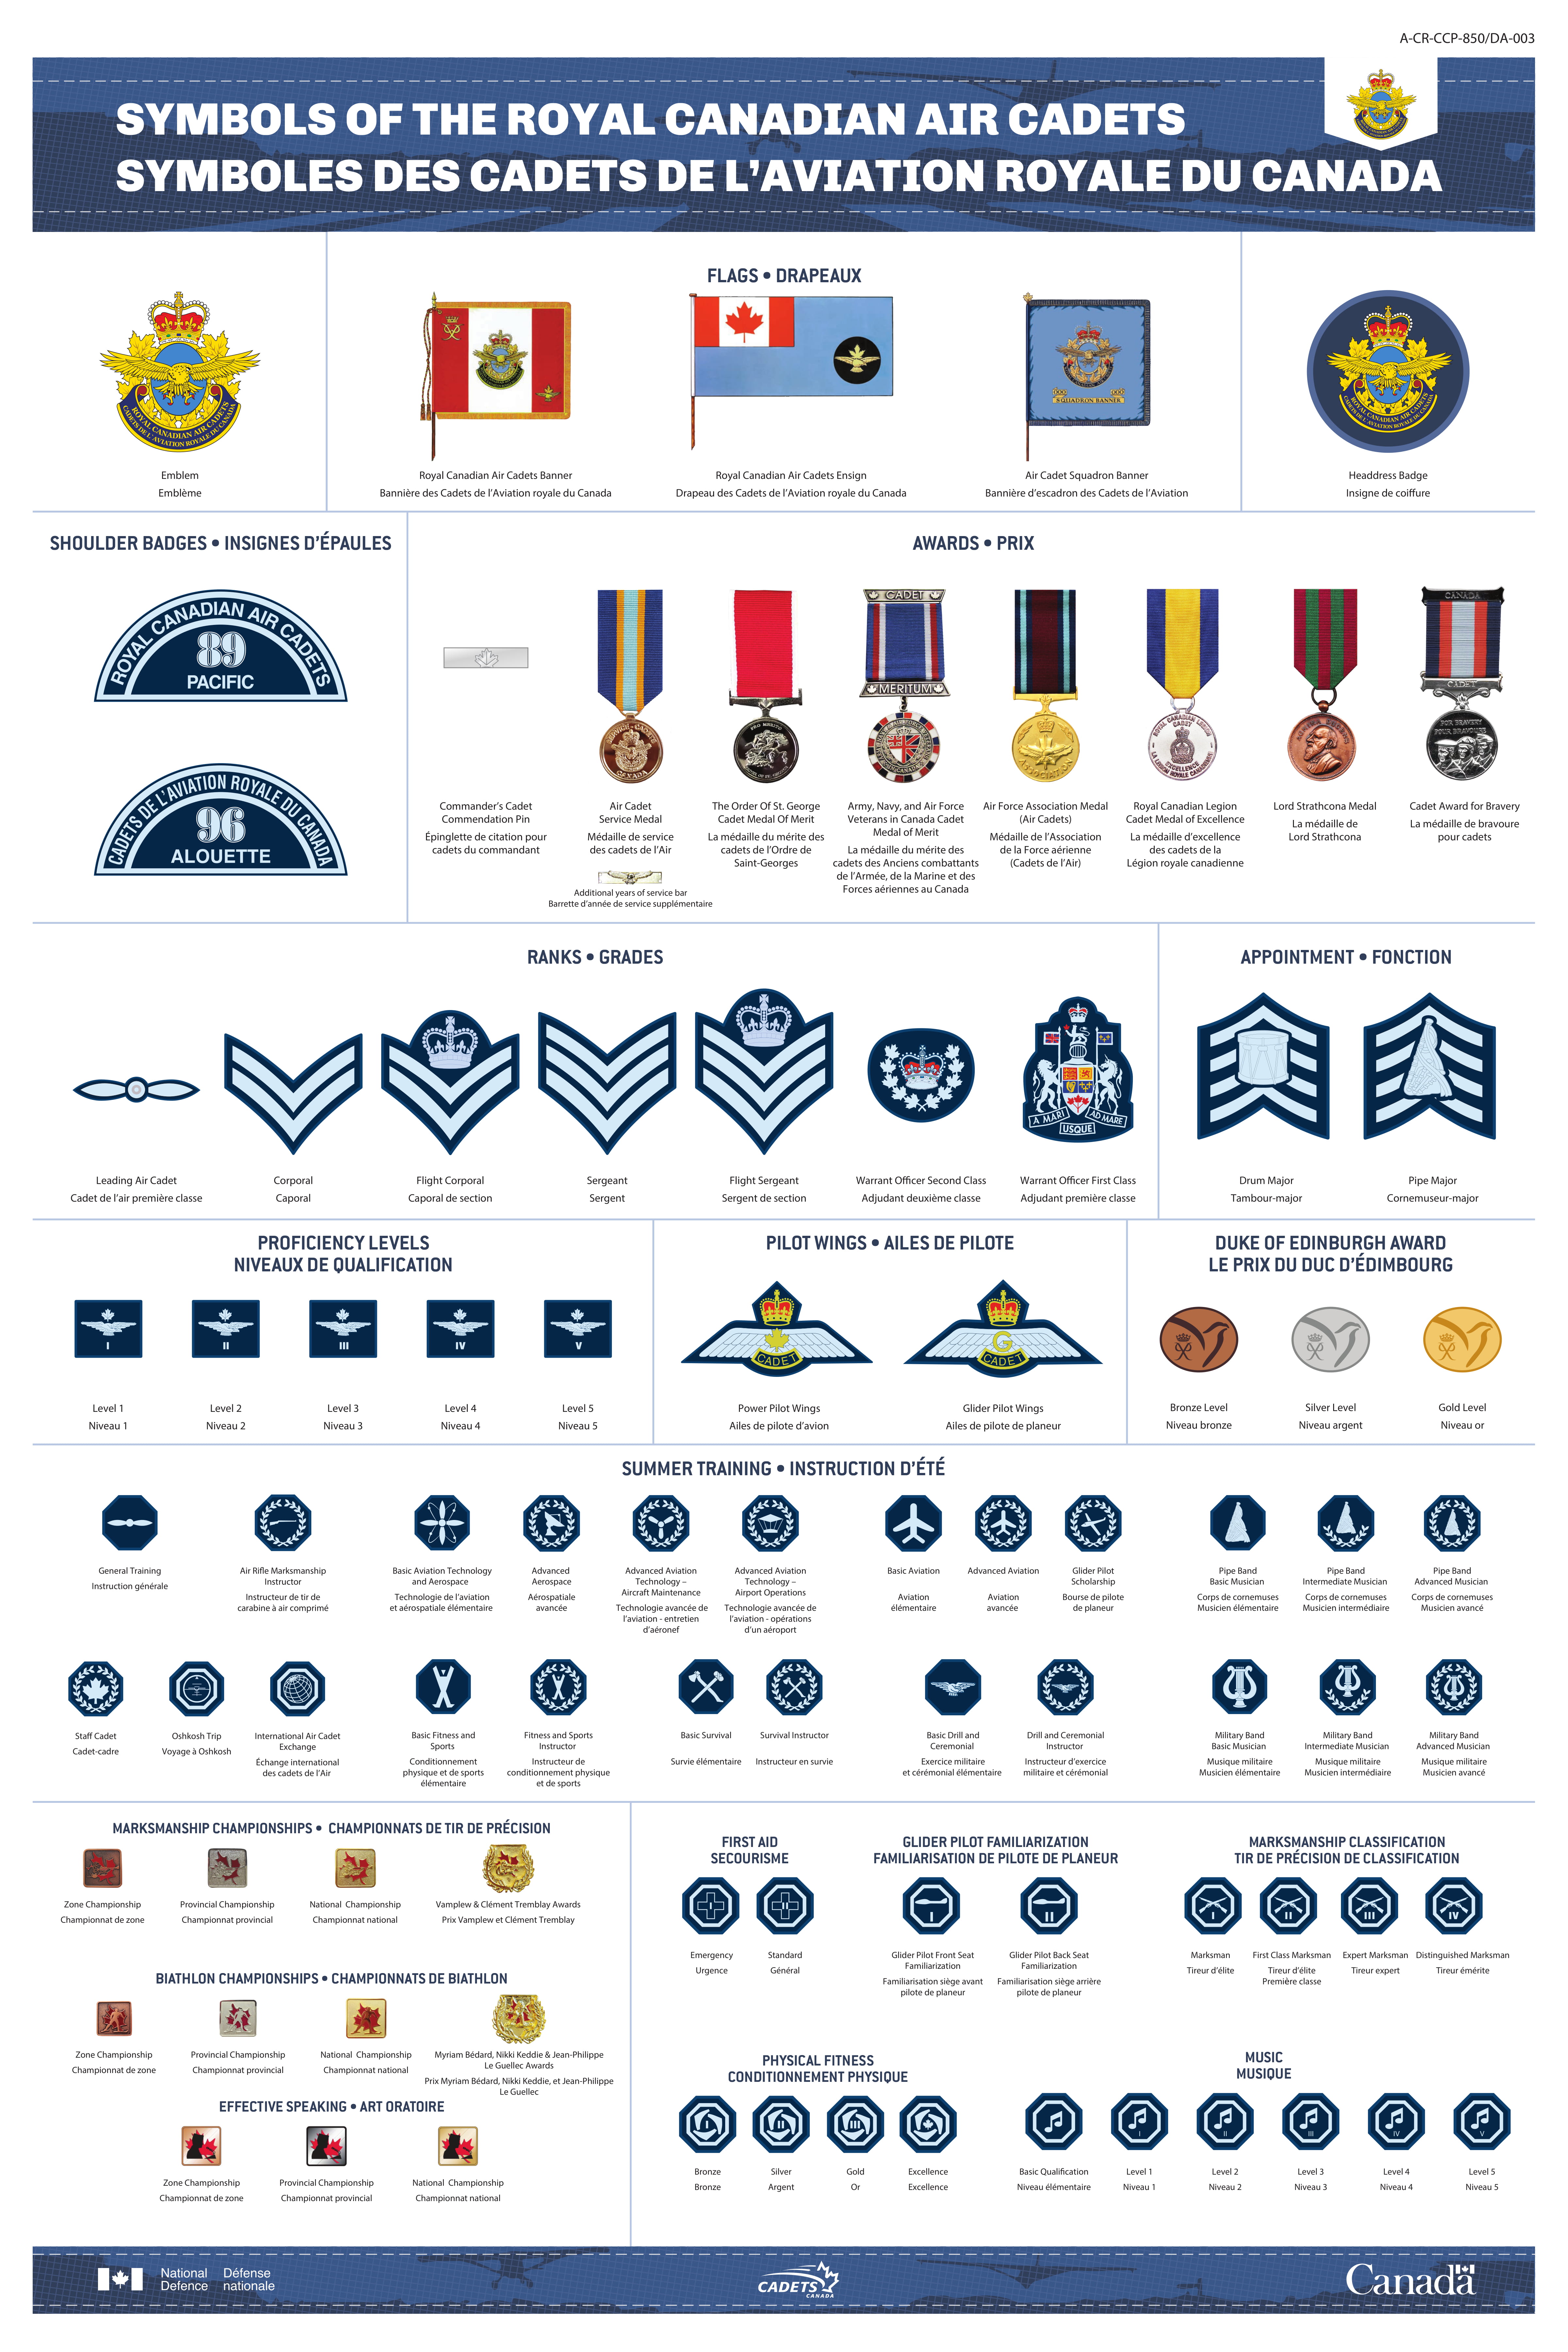 Symbols of The Royal Canadian Air Cadets